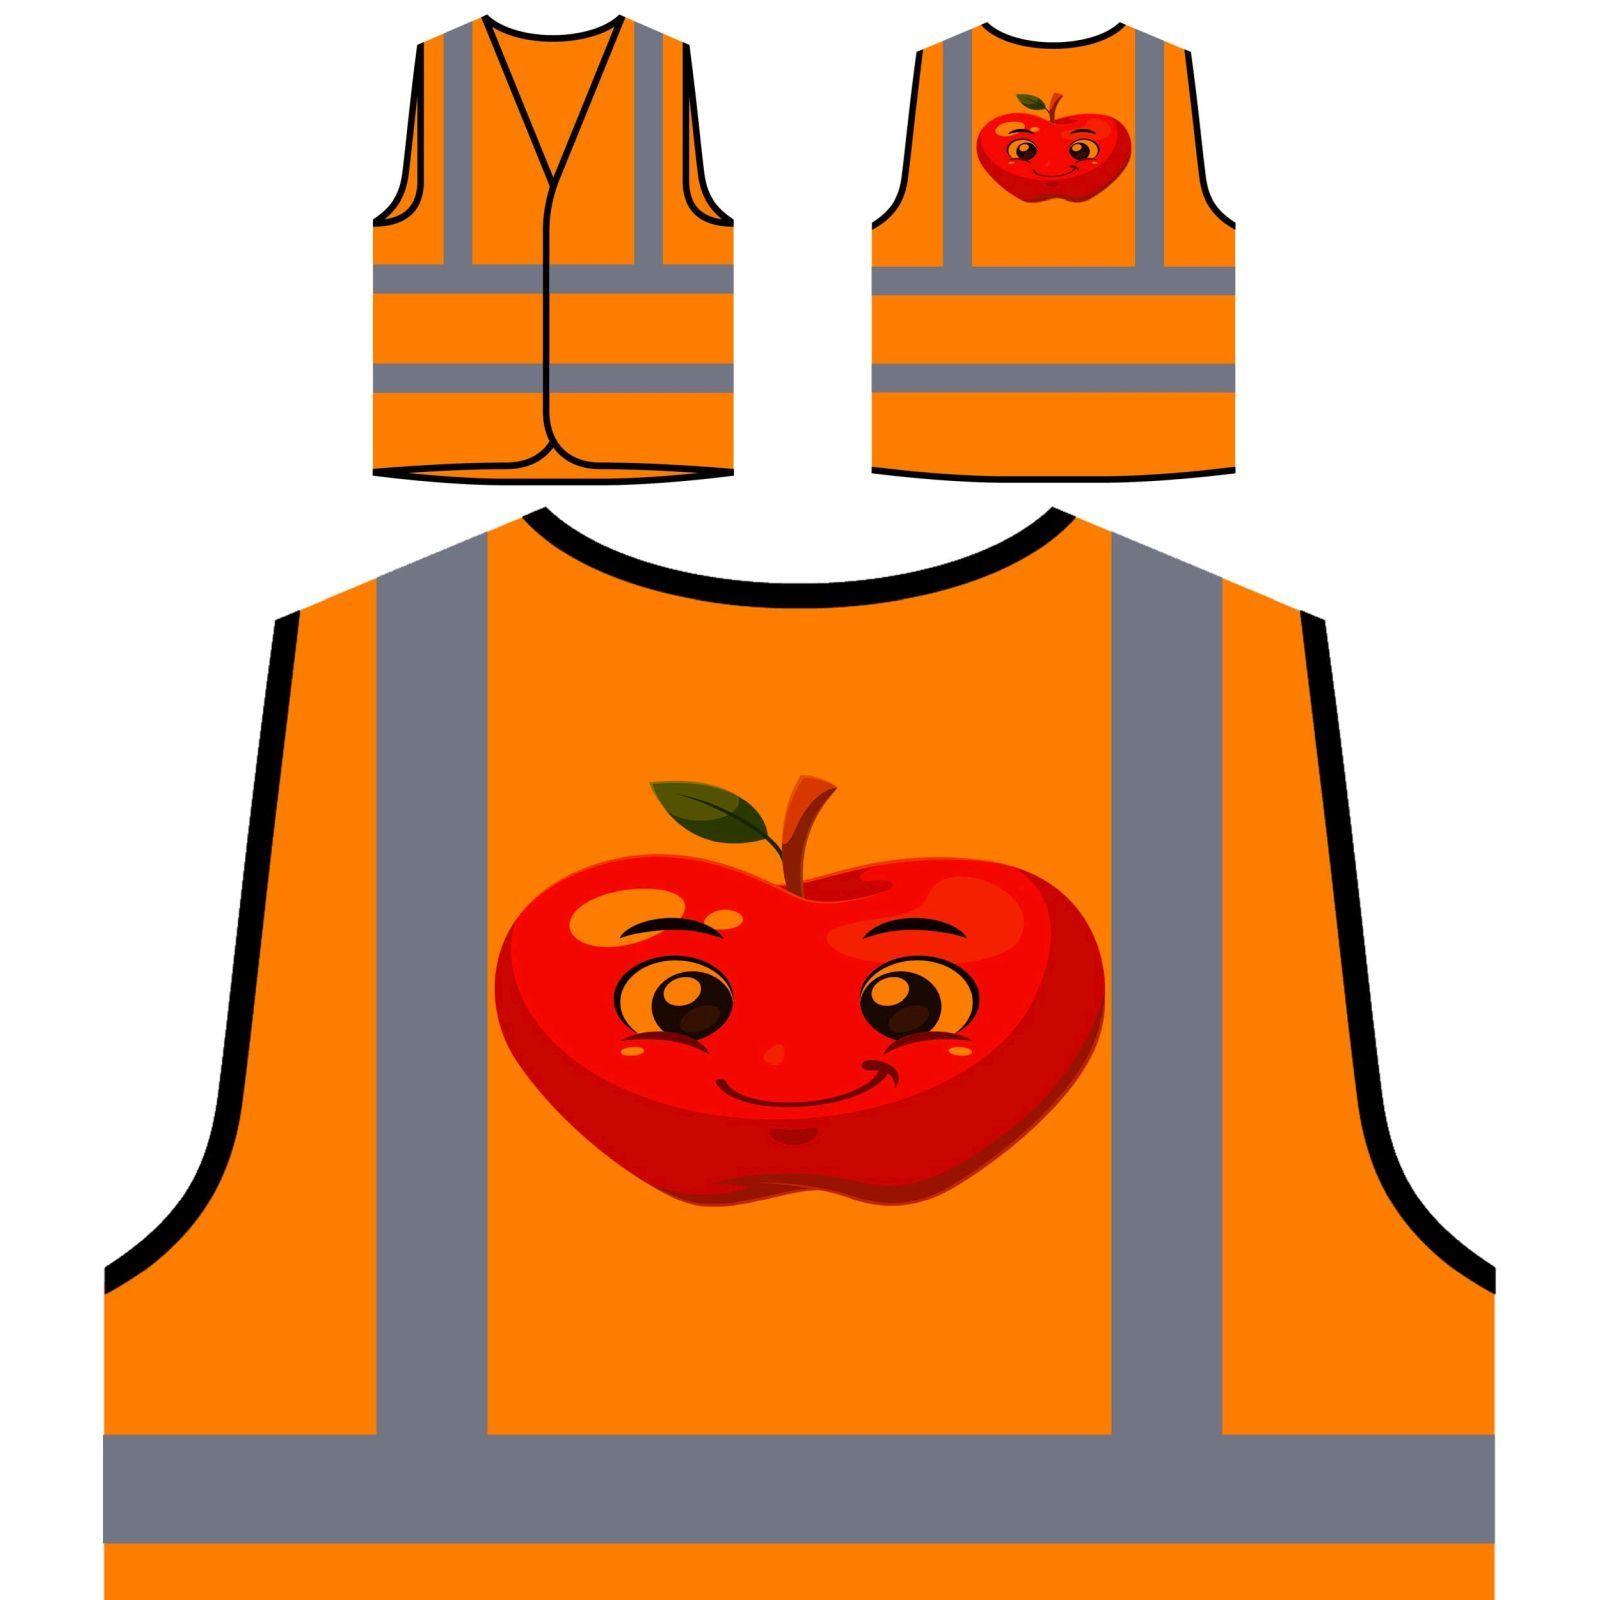 Red Yellow Orange Logo - Red Apple Smiley Yellow Orange Safety Vest U632v